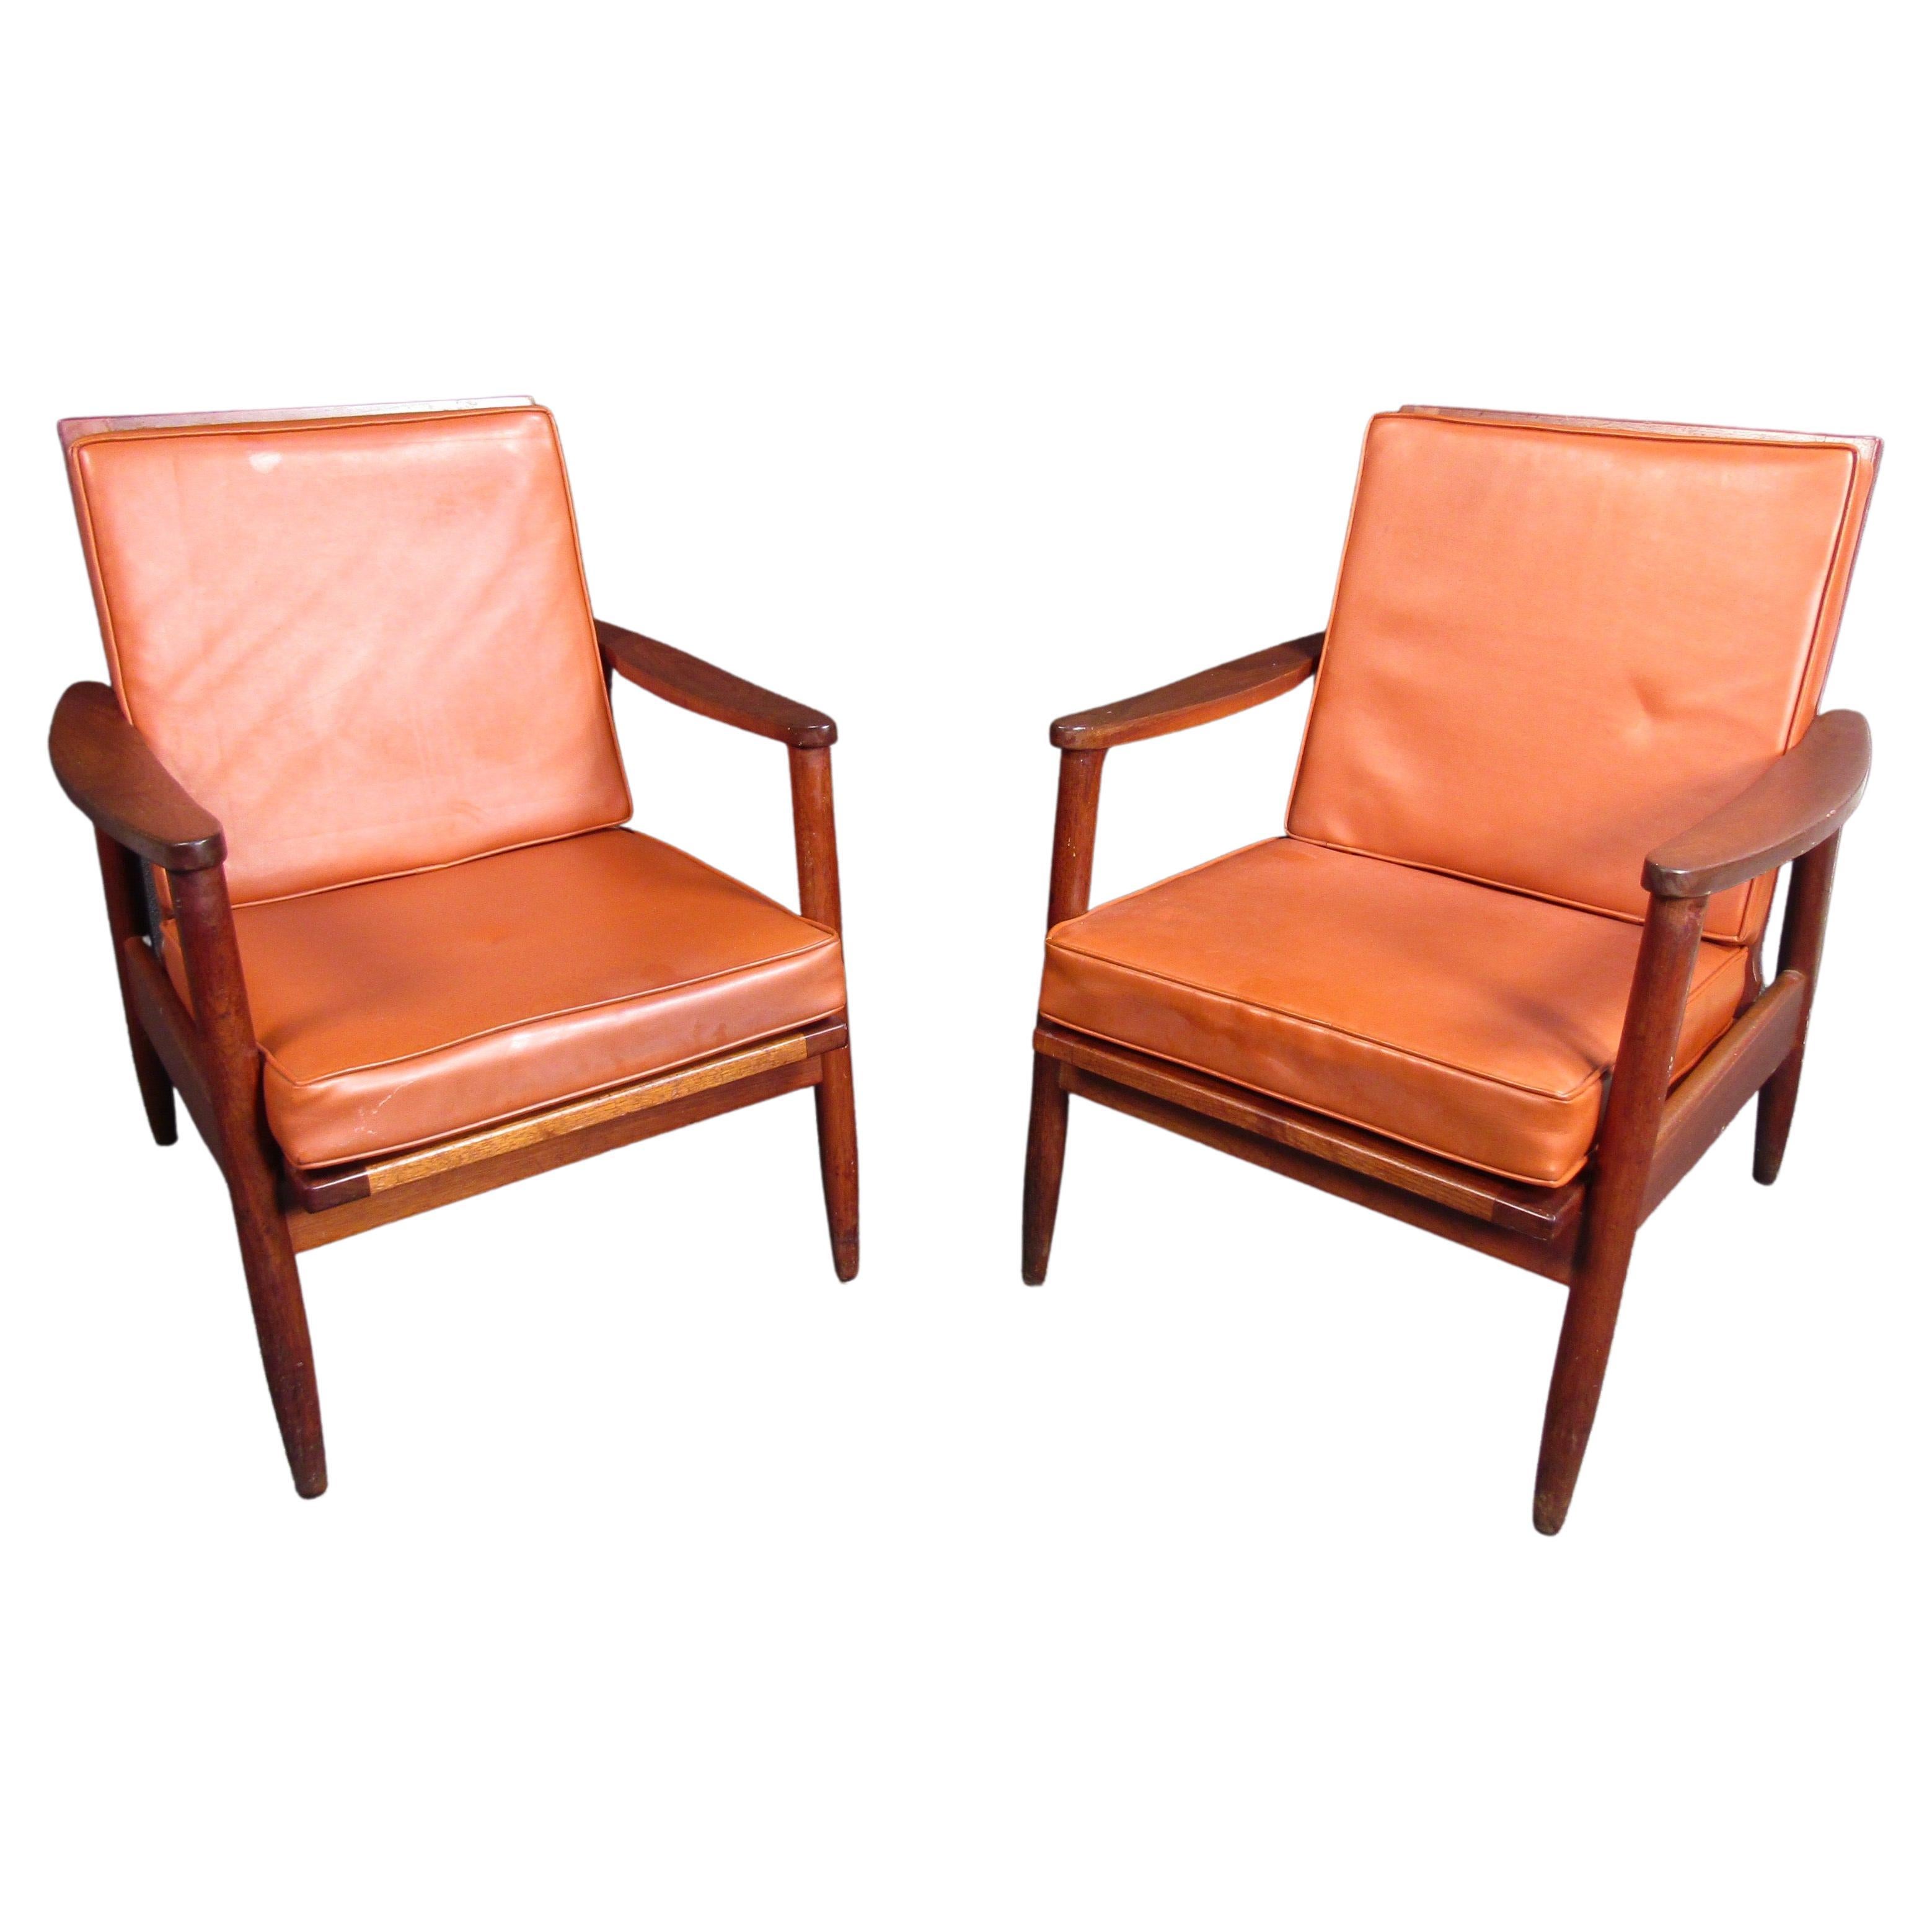 Pair of Vintage Modern Walnut Chairs